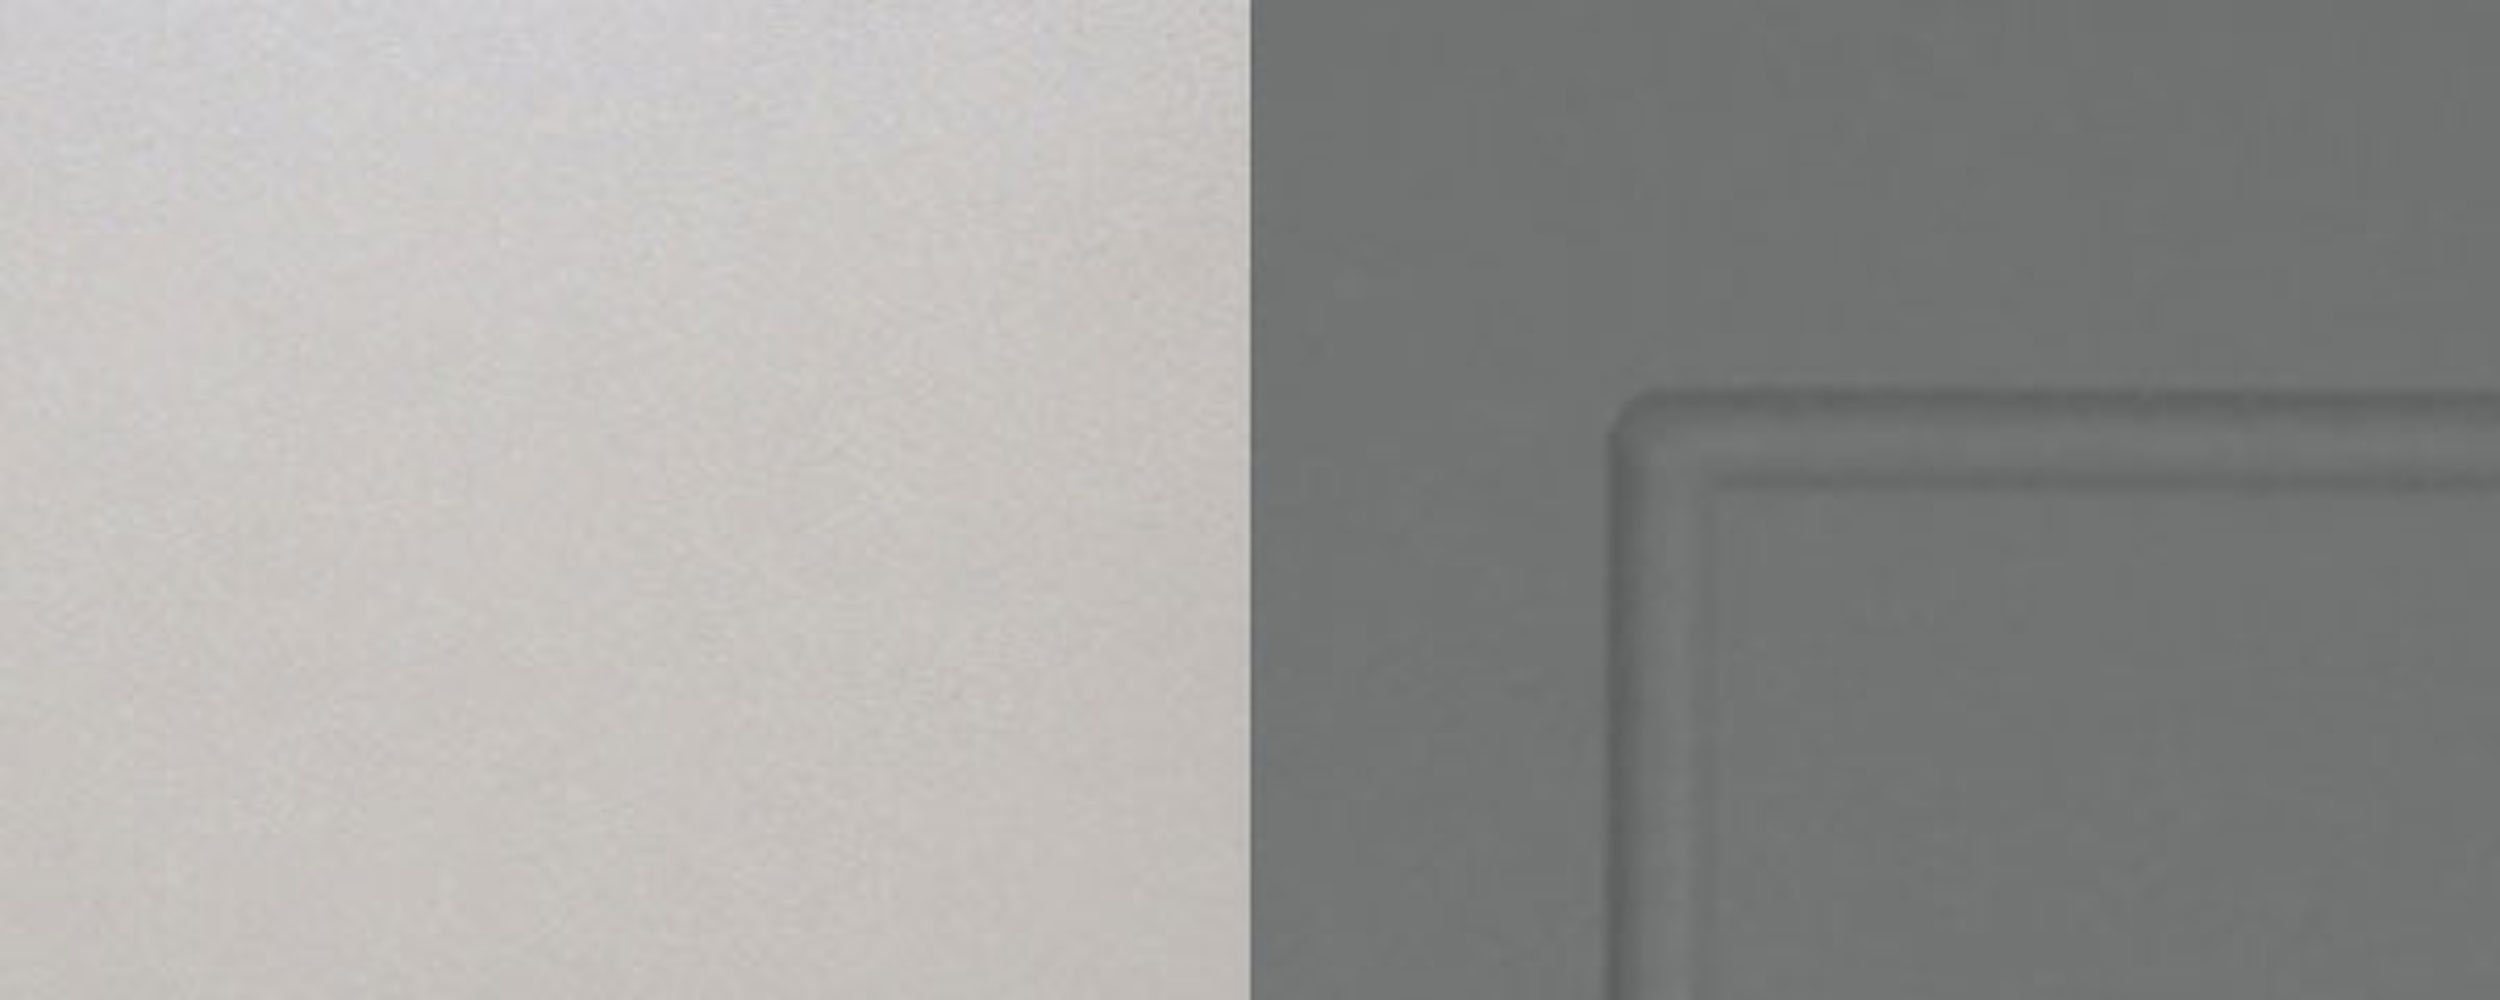 Feldmann-Wohnen Backofenumbauschrank Kvantum (Kvantum) 60cm wählbar Einbaugeräte Fächer dust Front- matt grey & Korpusfarbe 2-türig 2 für